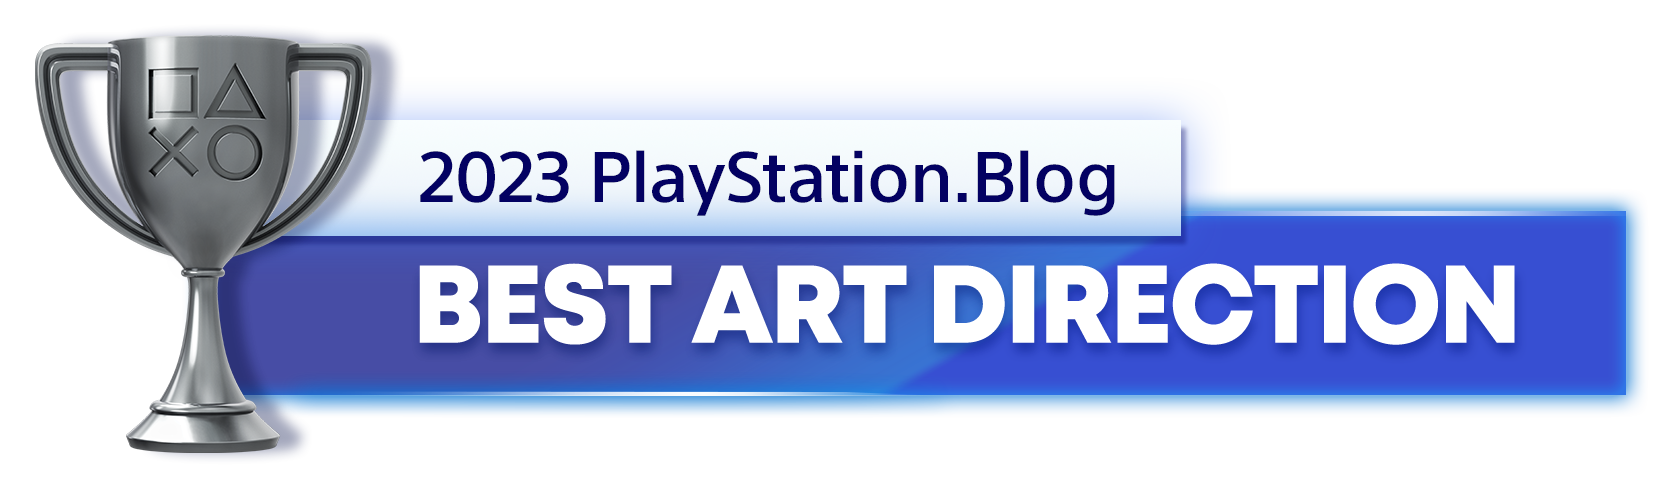  "Silver Trophy for the 2023 PlayStation Blog Best Art Direction Winner"